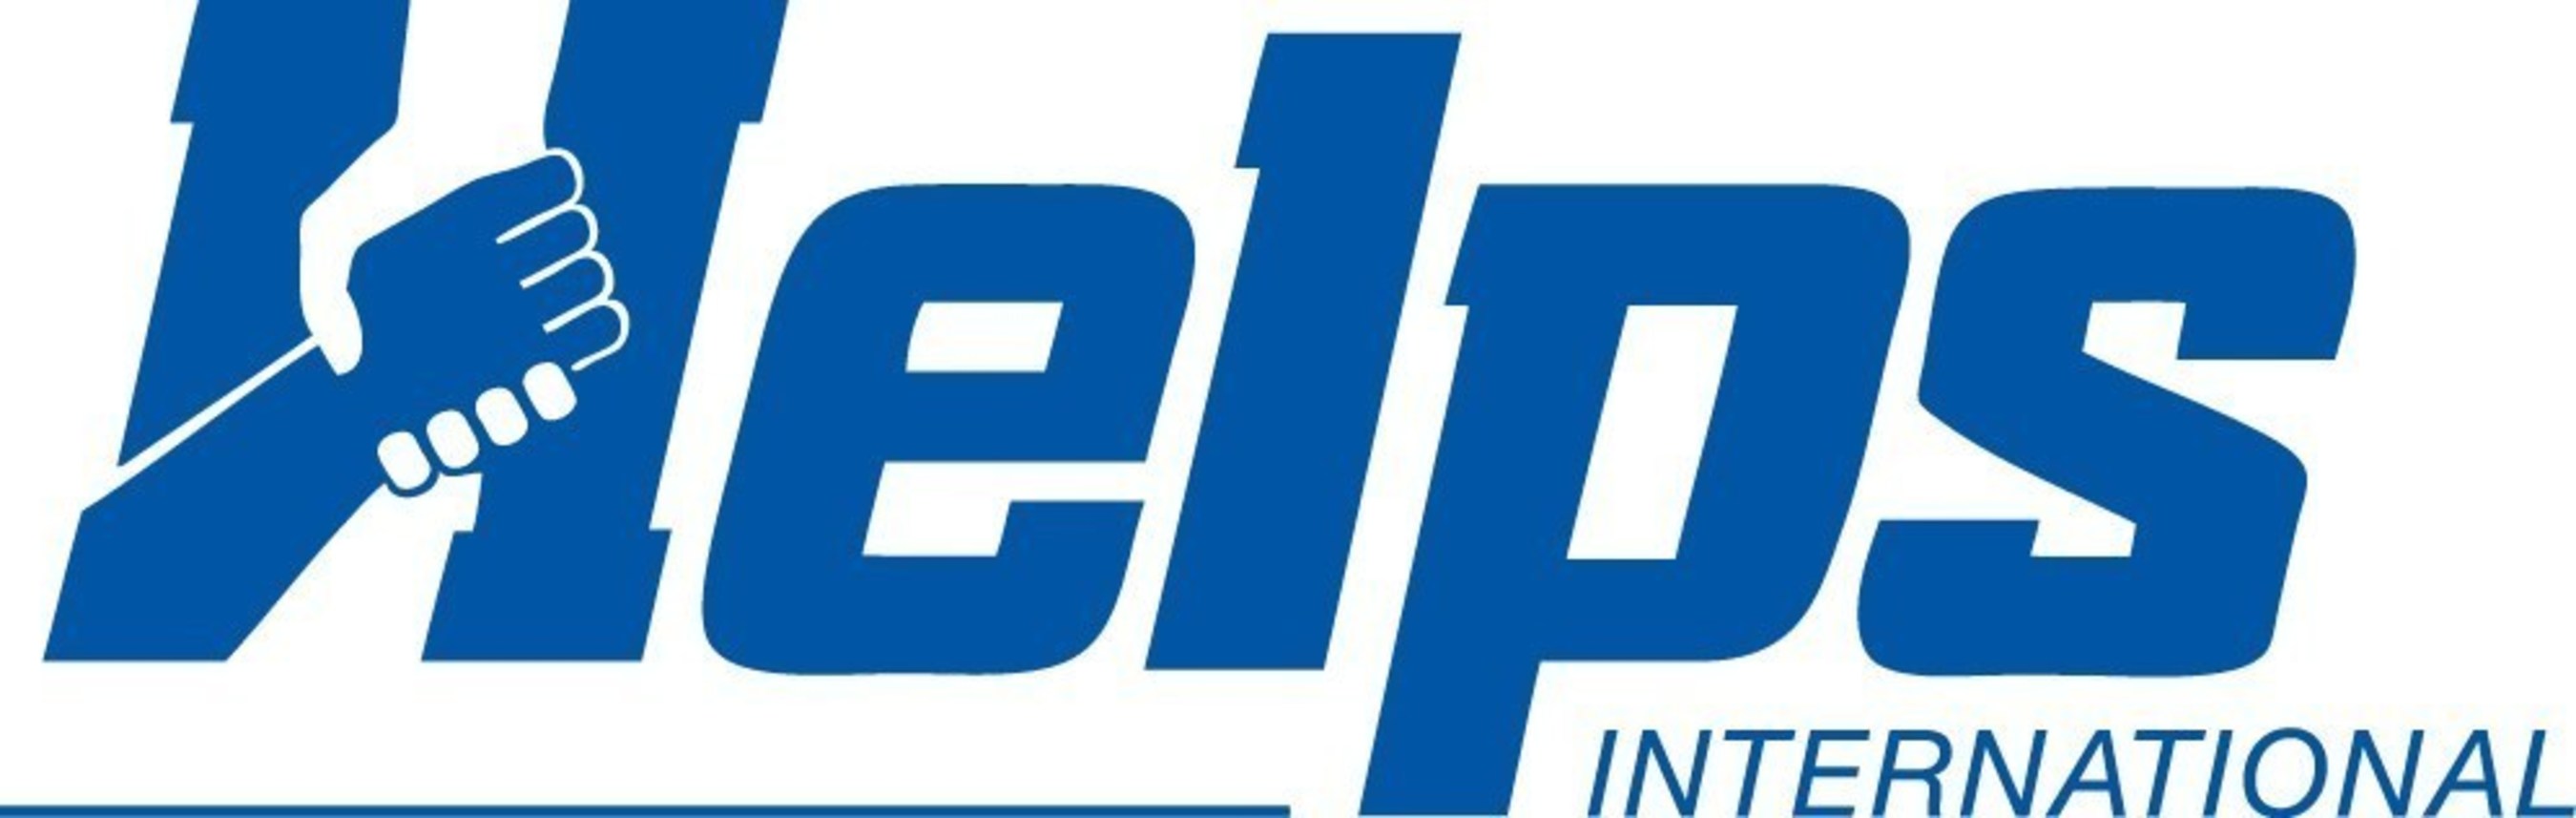 HELPS International Logo.